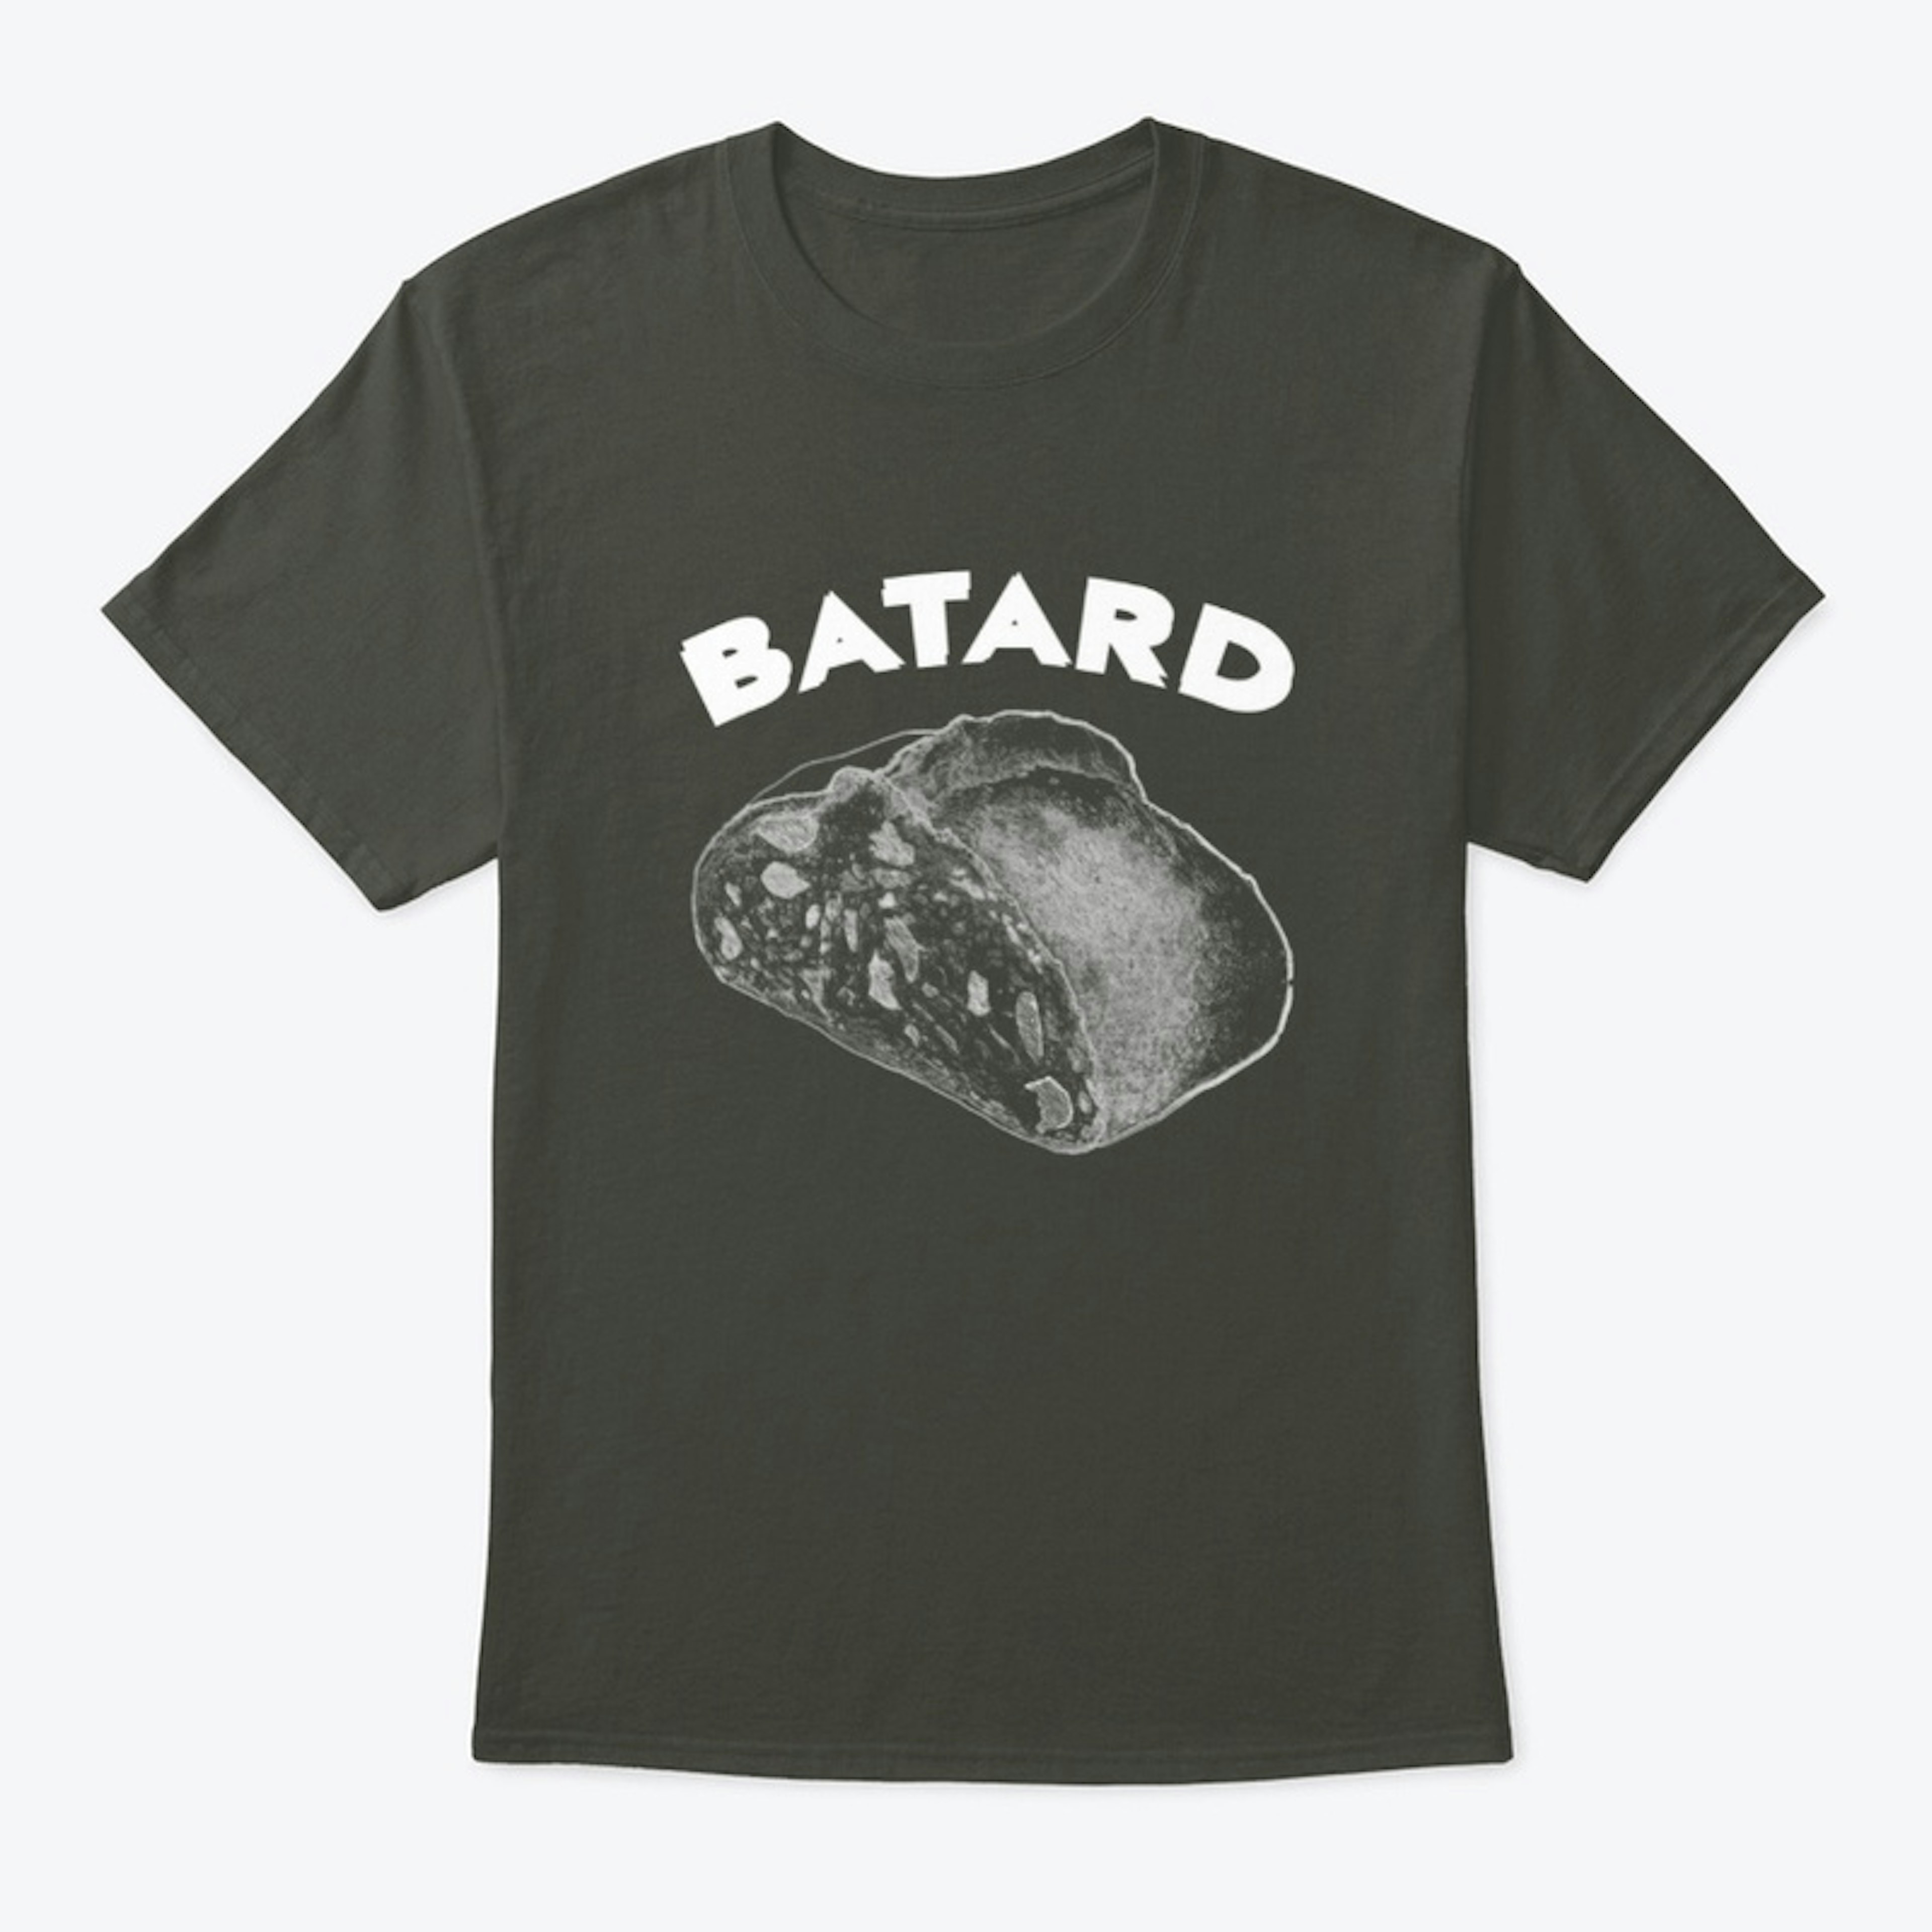 Batard Sourdough Bread